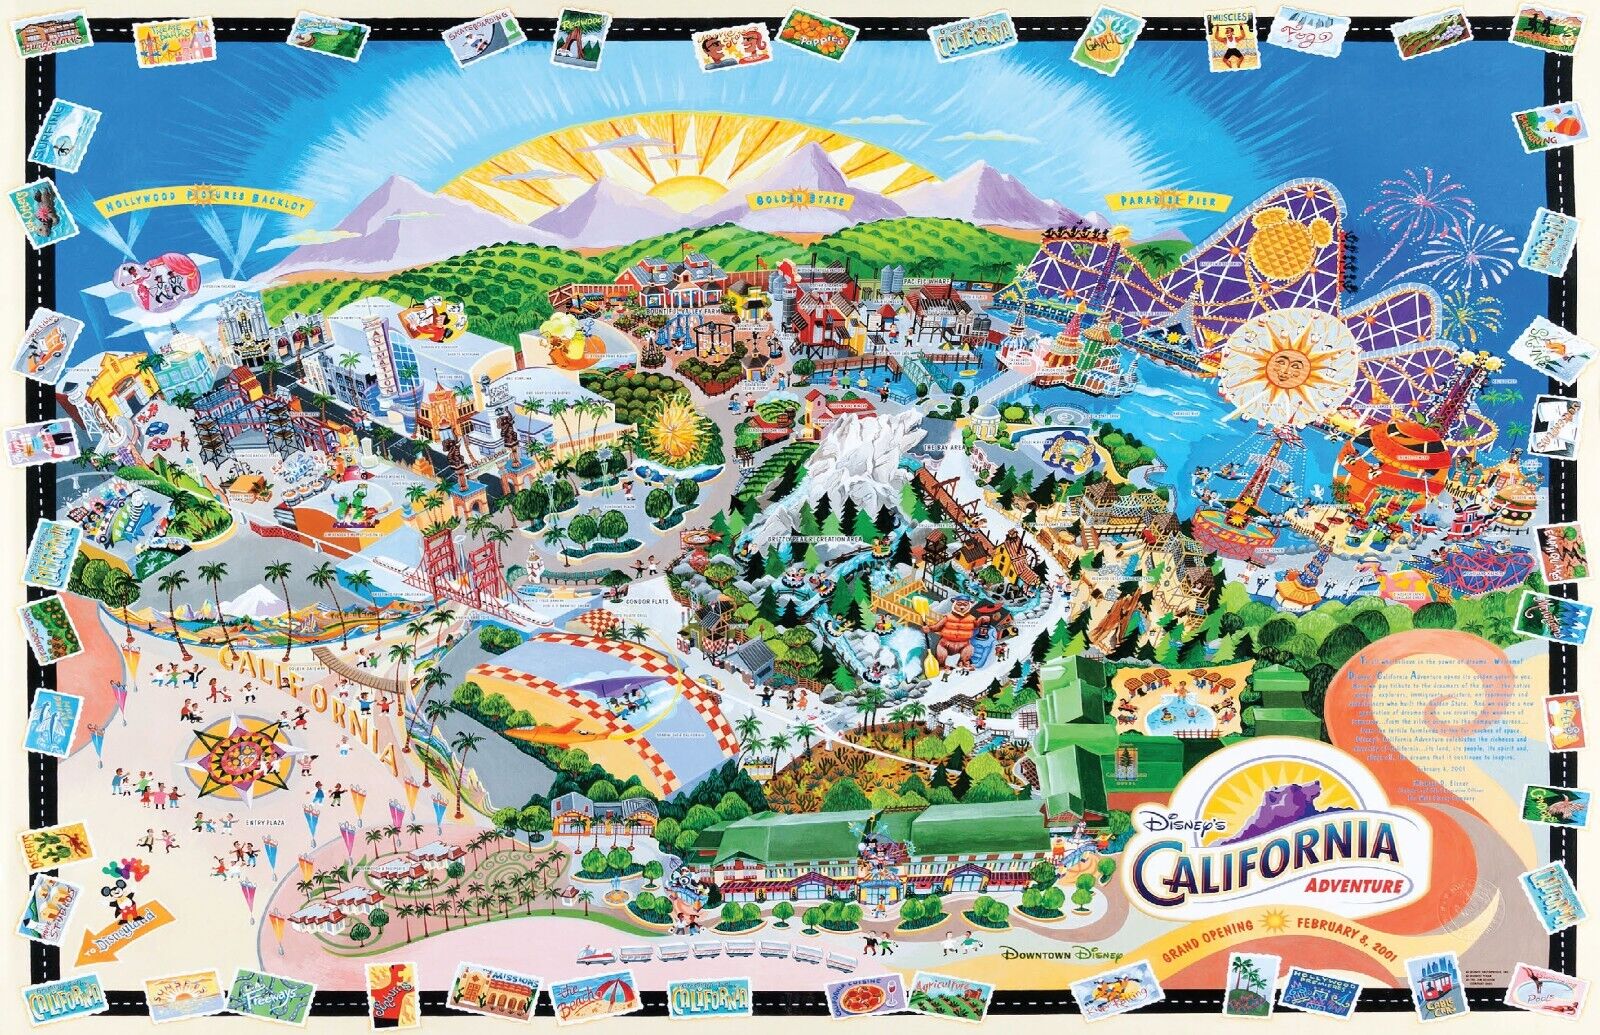 Disneyland California Adventure Grand Opening Map Poster Print 2001 Disney